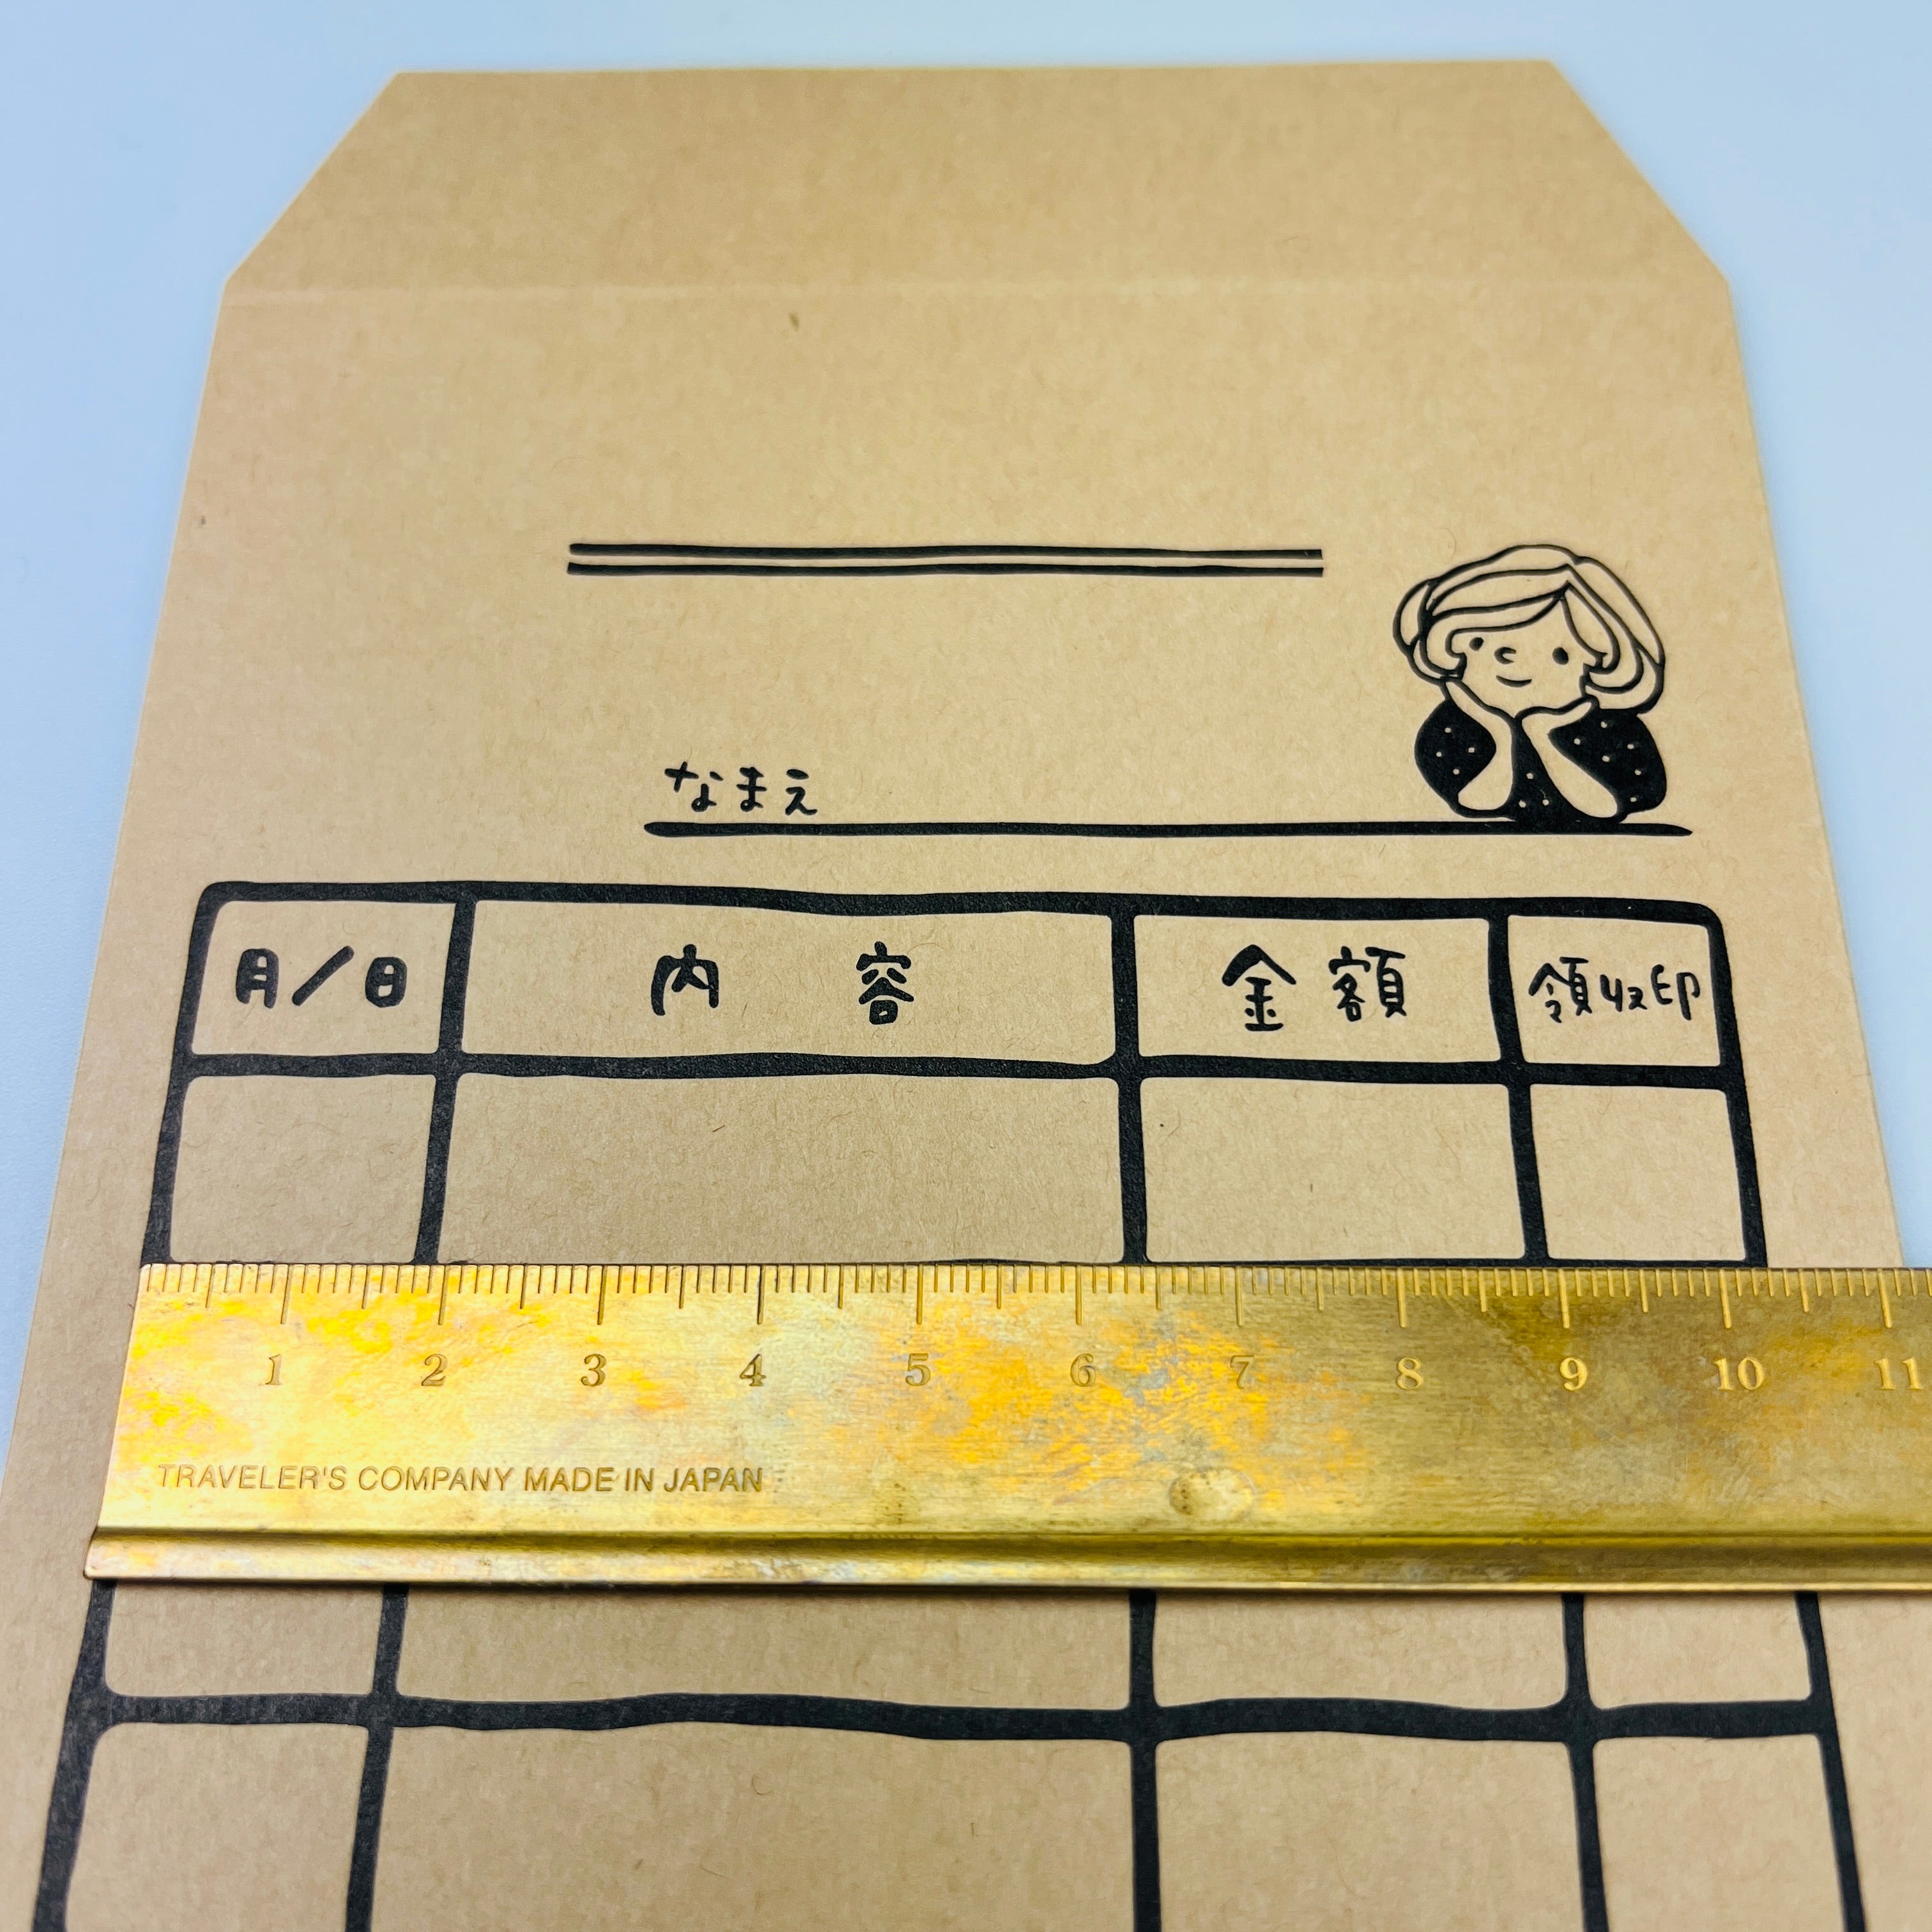 Maron-chan "Collection Bag" Envelope (10 Pieces)